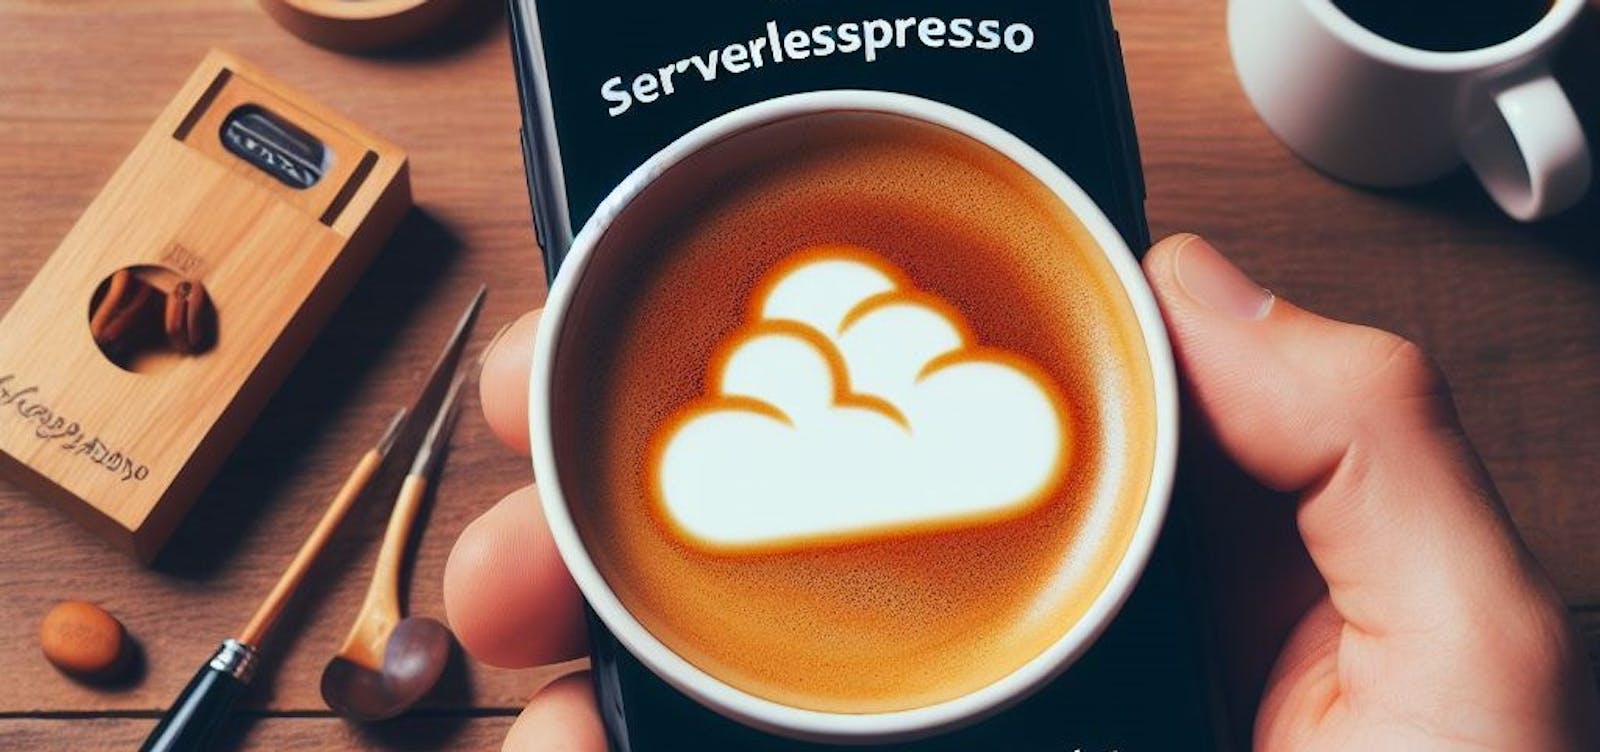 Building Serverlesspresso 1